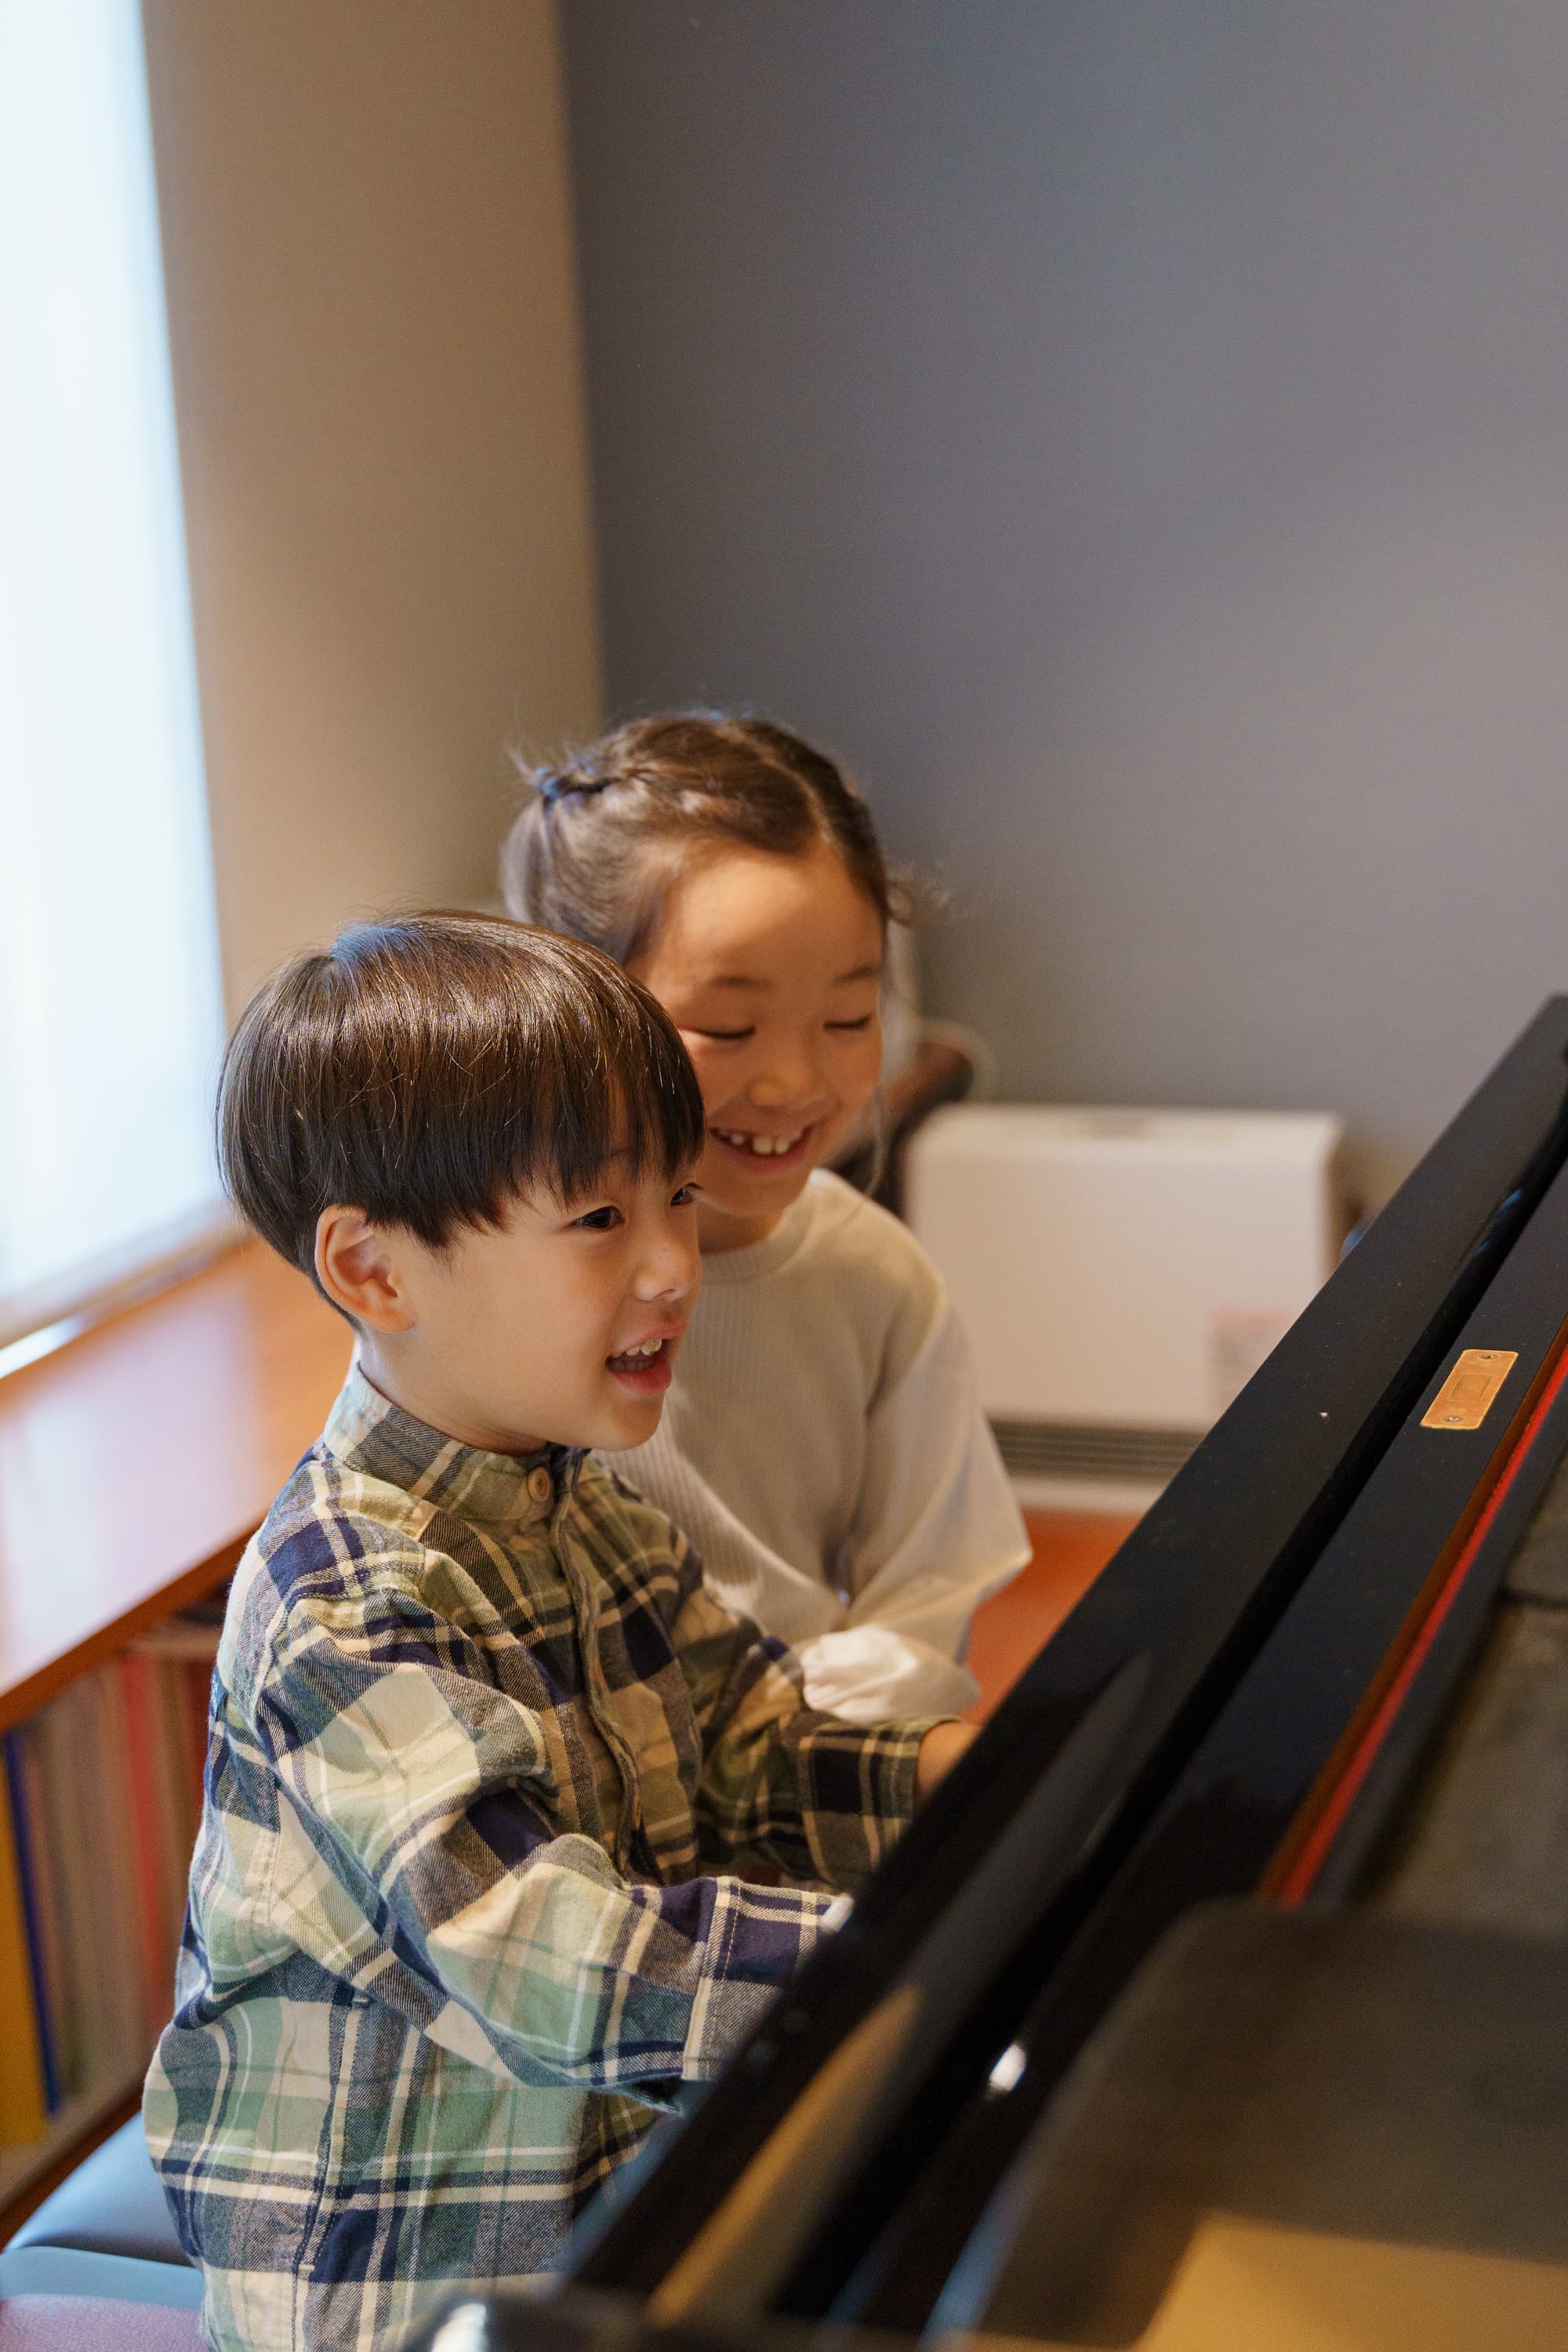 Motoda Piano School Students